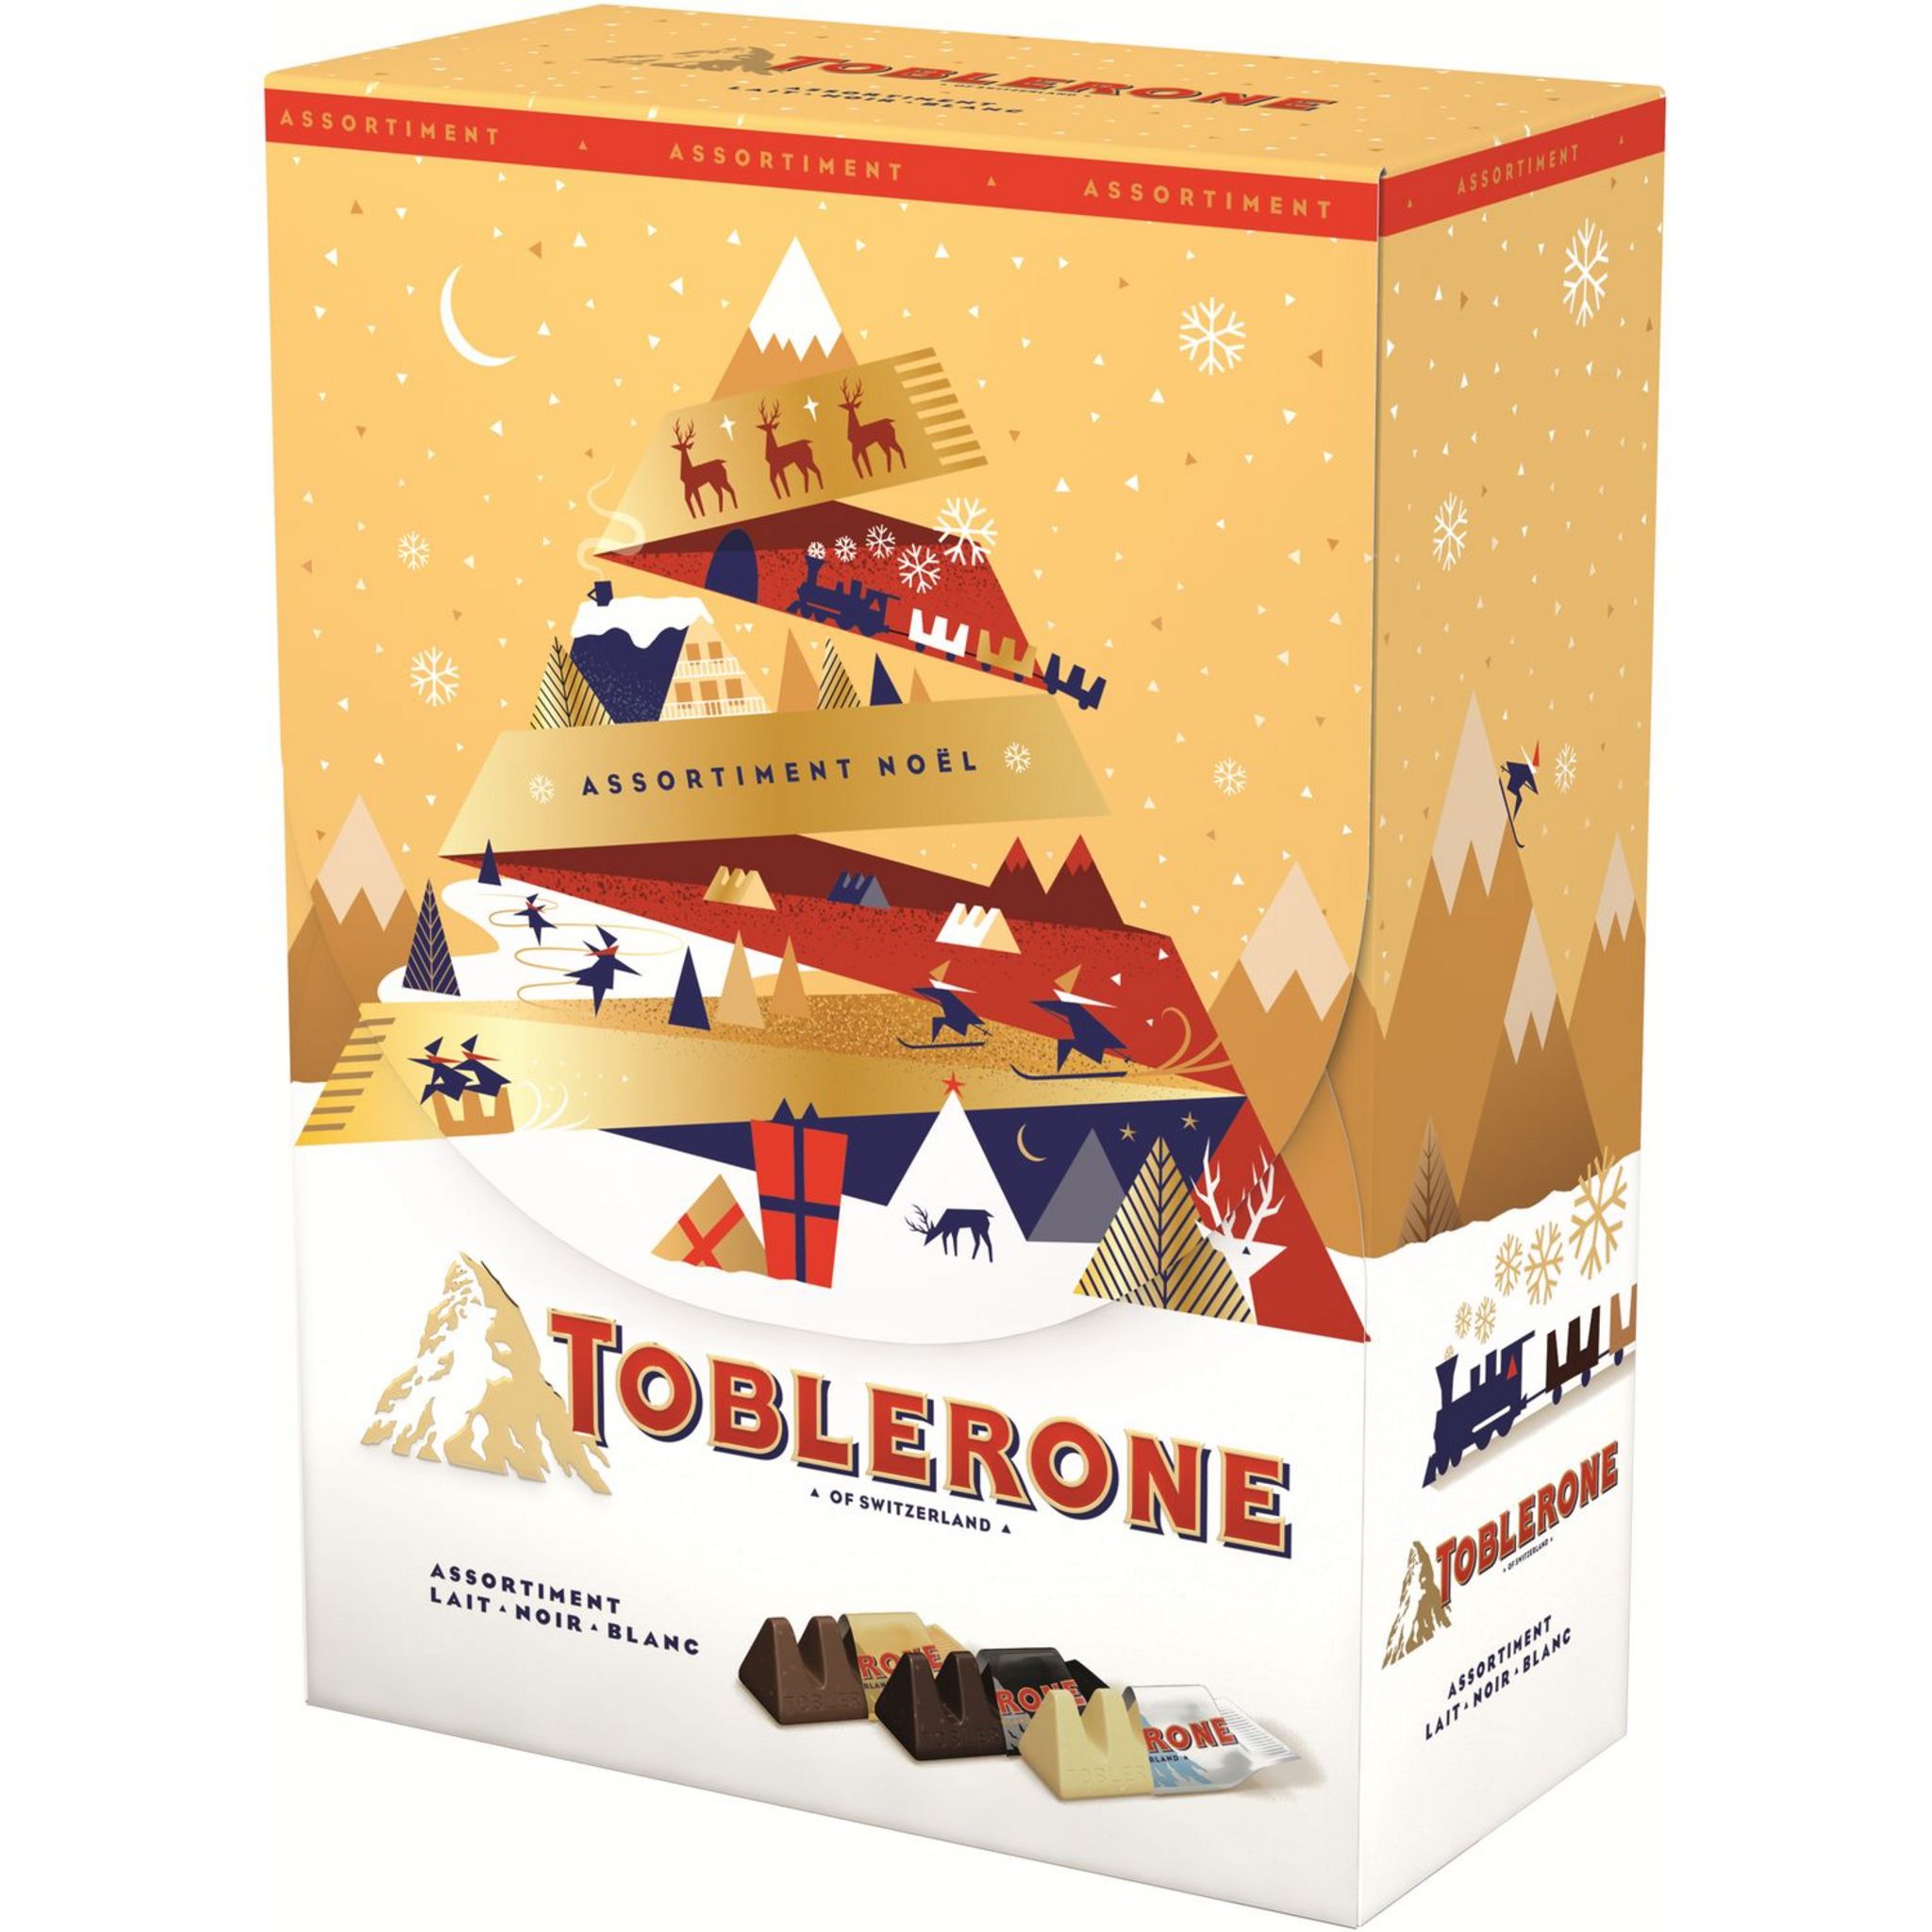 TOBLERONE Toblerone chocolat assortiment boite 400g pas cher 